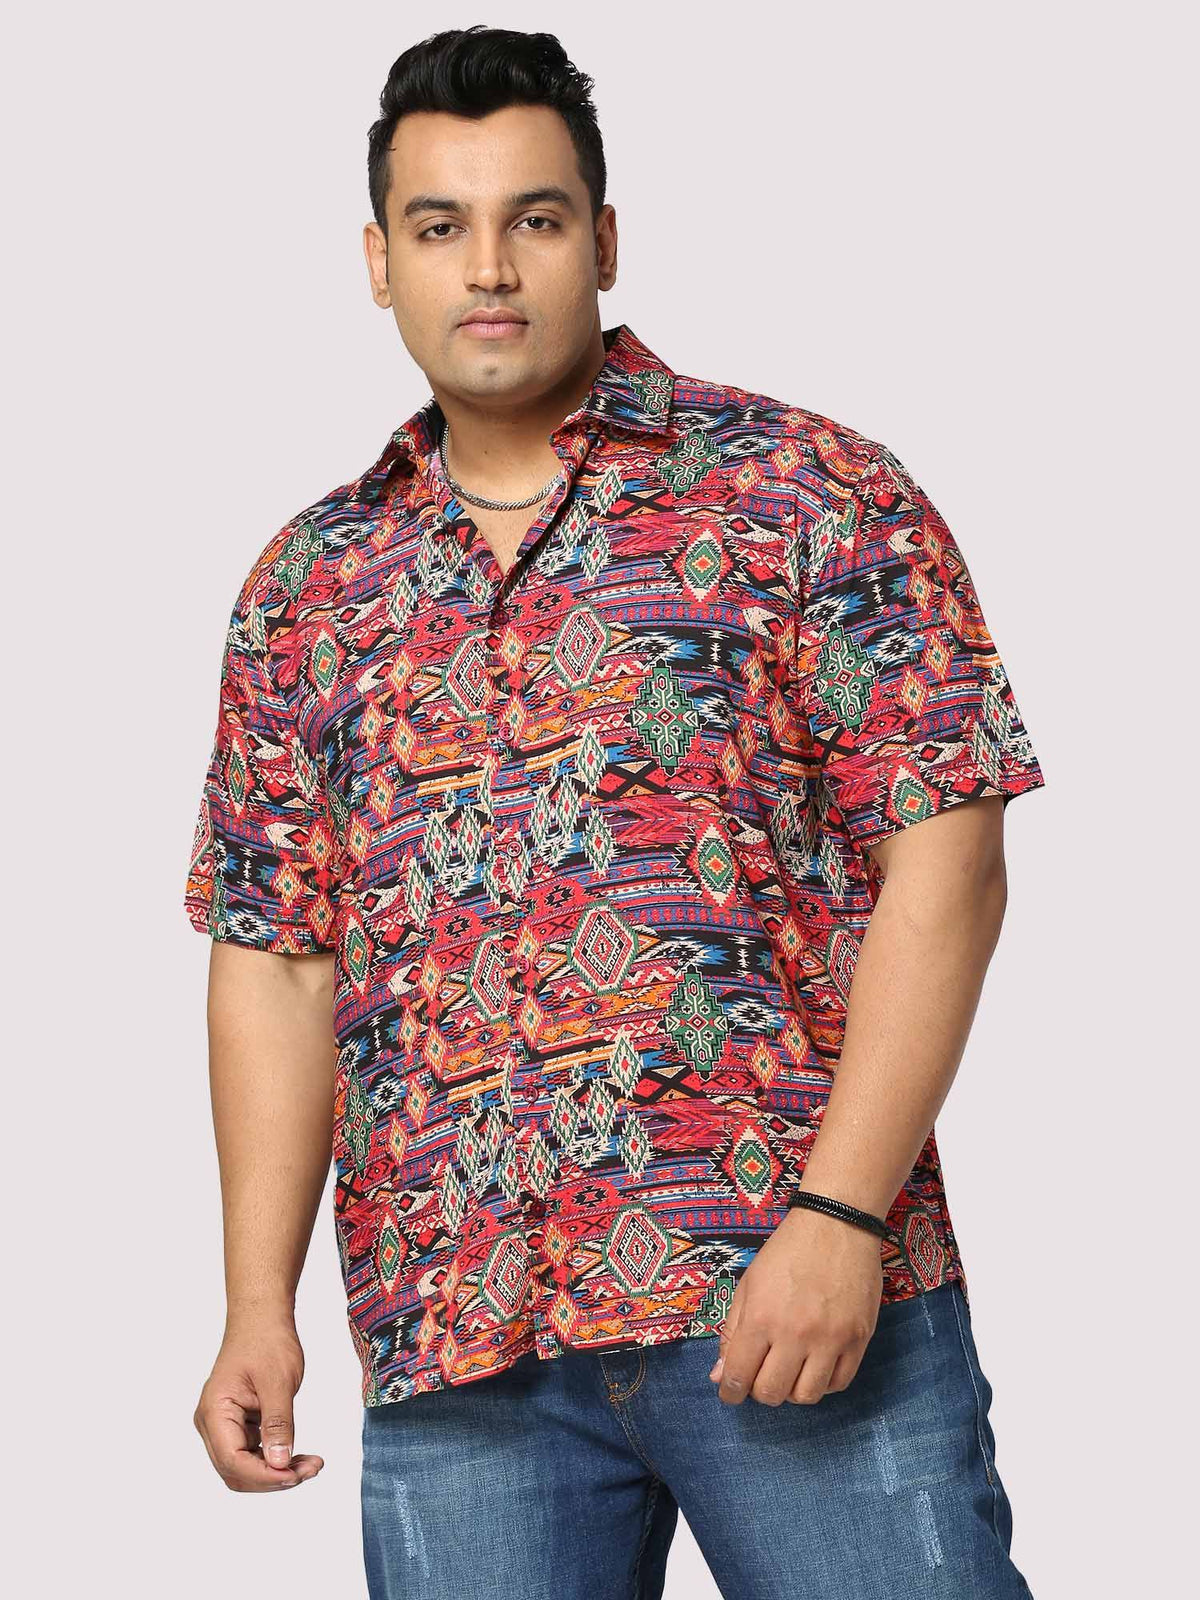 Electro Digital Printed Half Shirt Men's Plus Size - Guniaa Fashions